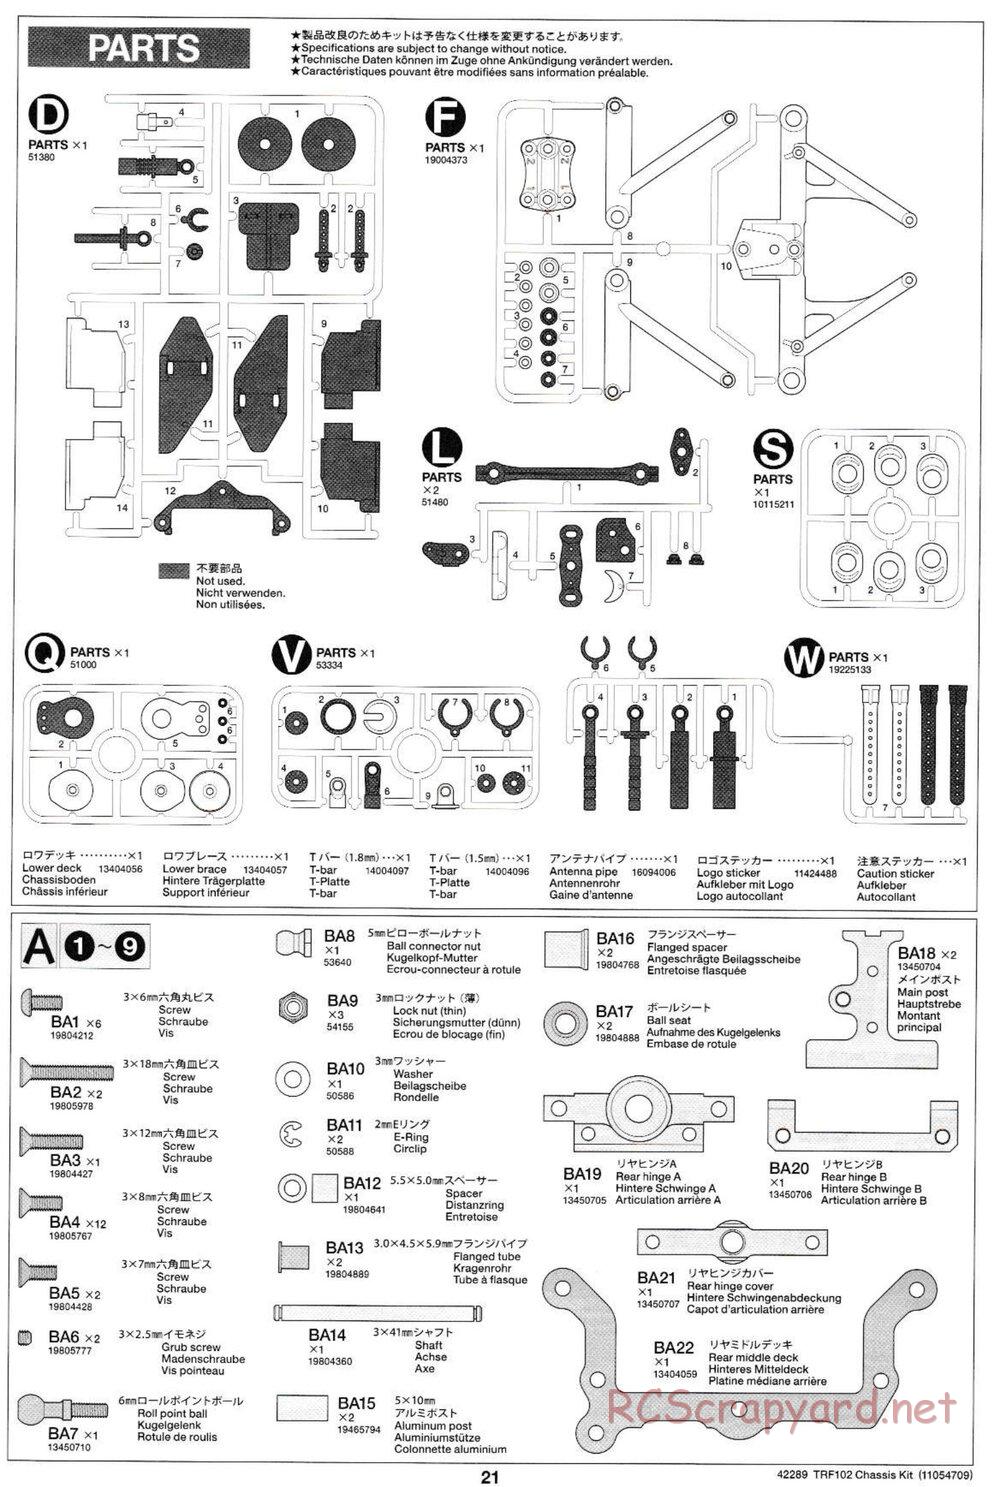 Tamiya - TRF102 Chassis - Manual - Page 21